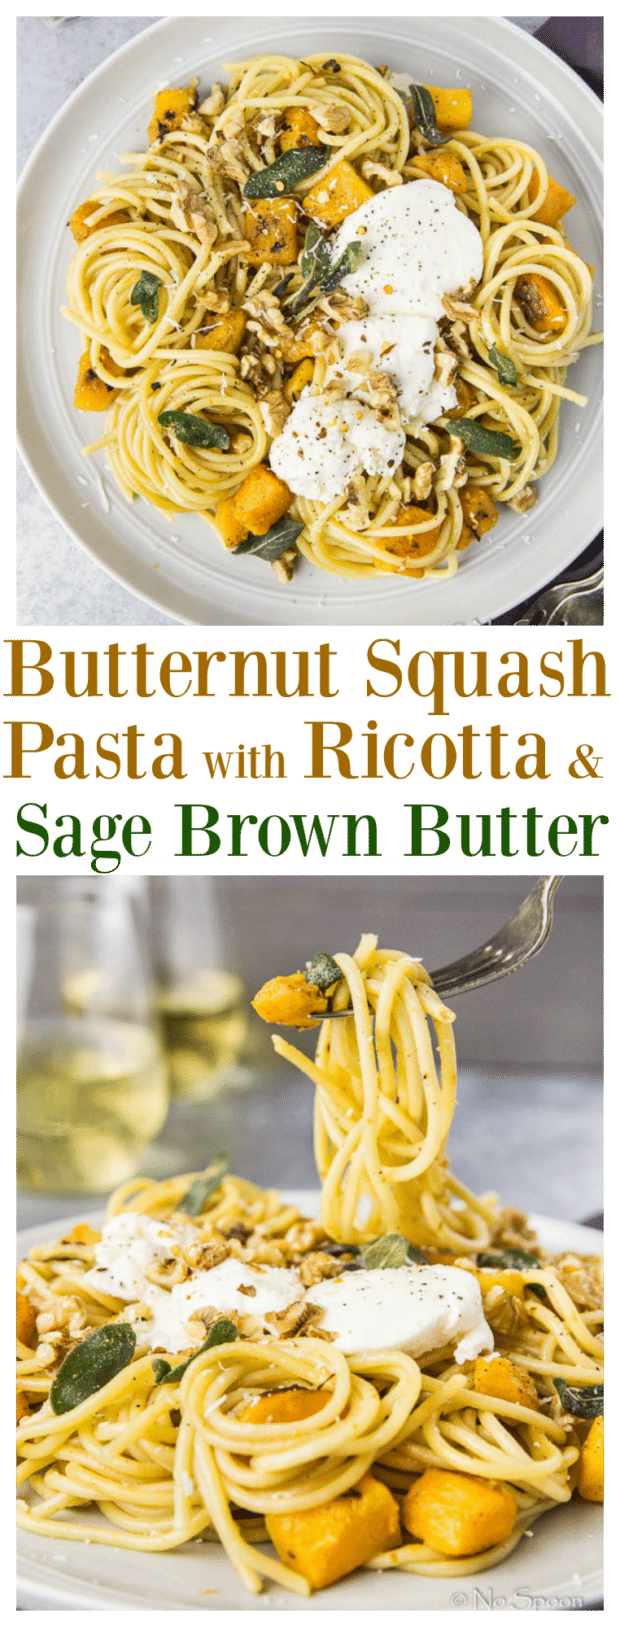 Butternut Squash Pasta with Ricotta & Sage Brown Butter